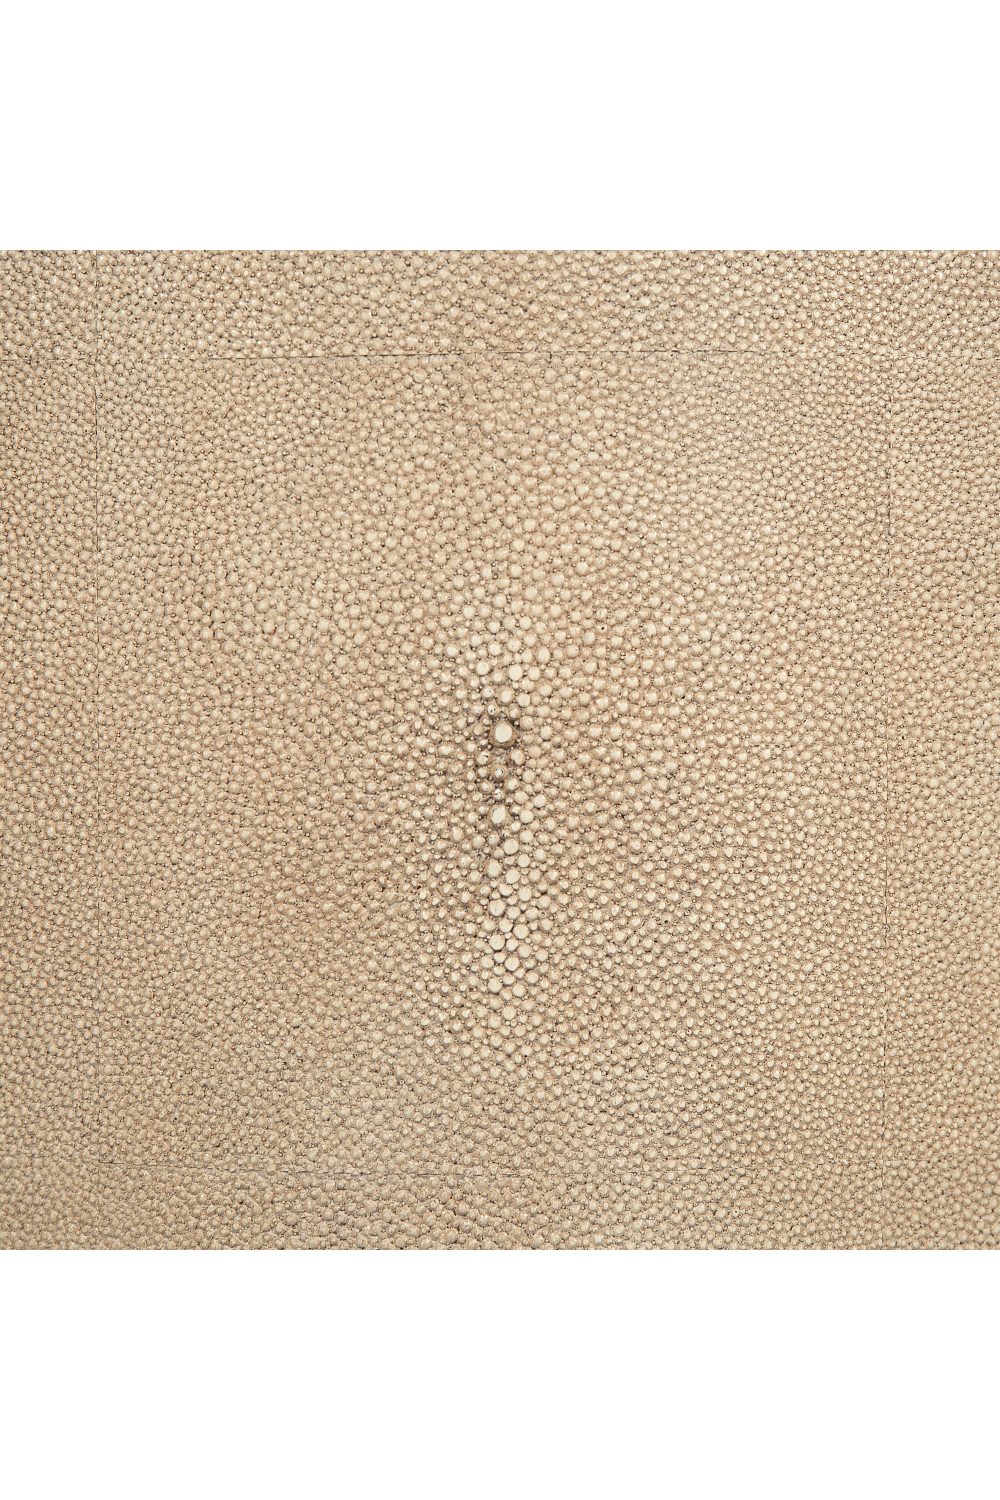 Ivory Shagreen Cylindrical Side Table L | Andrew Martin Braden | OROA